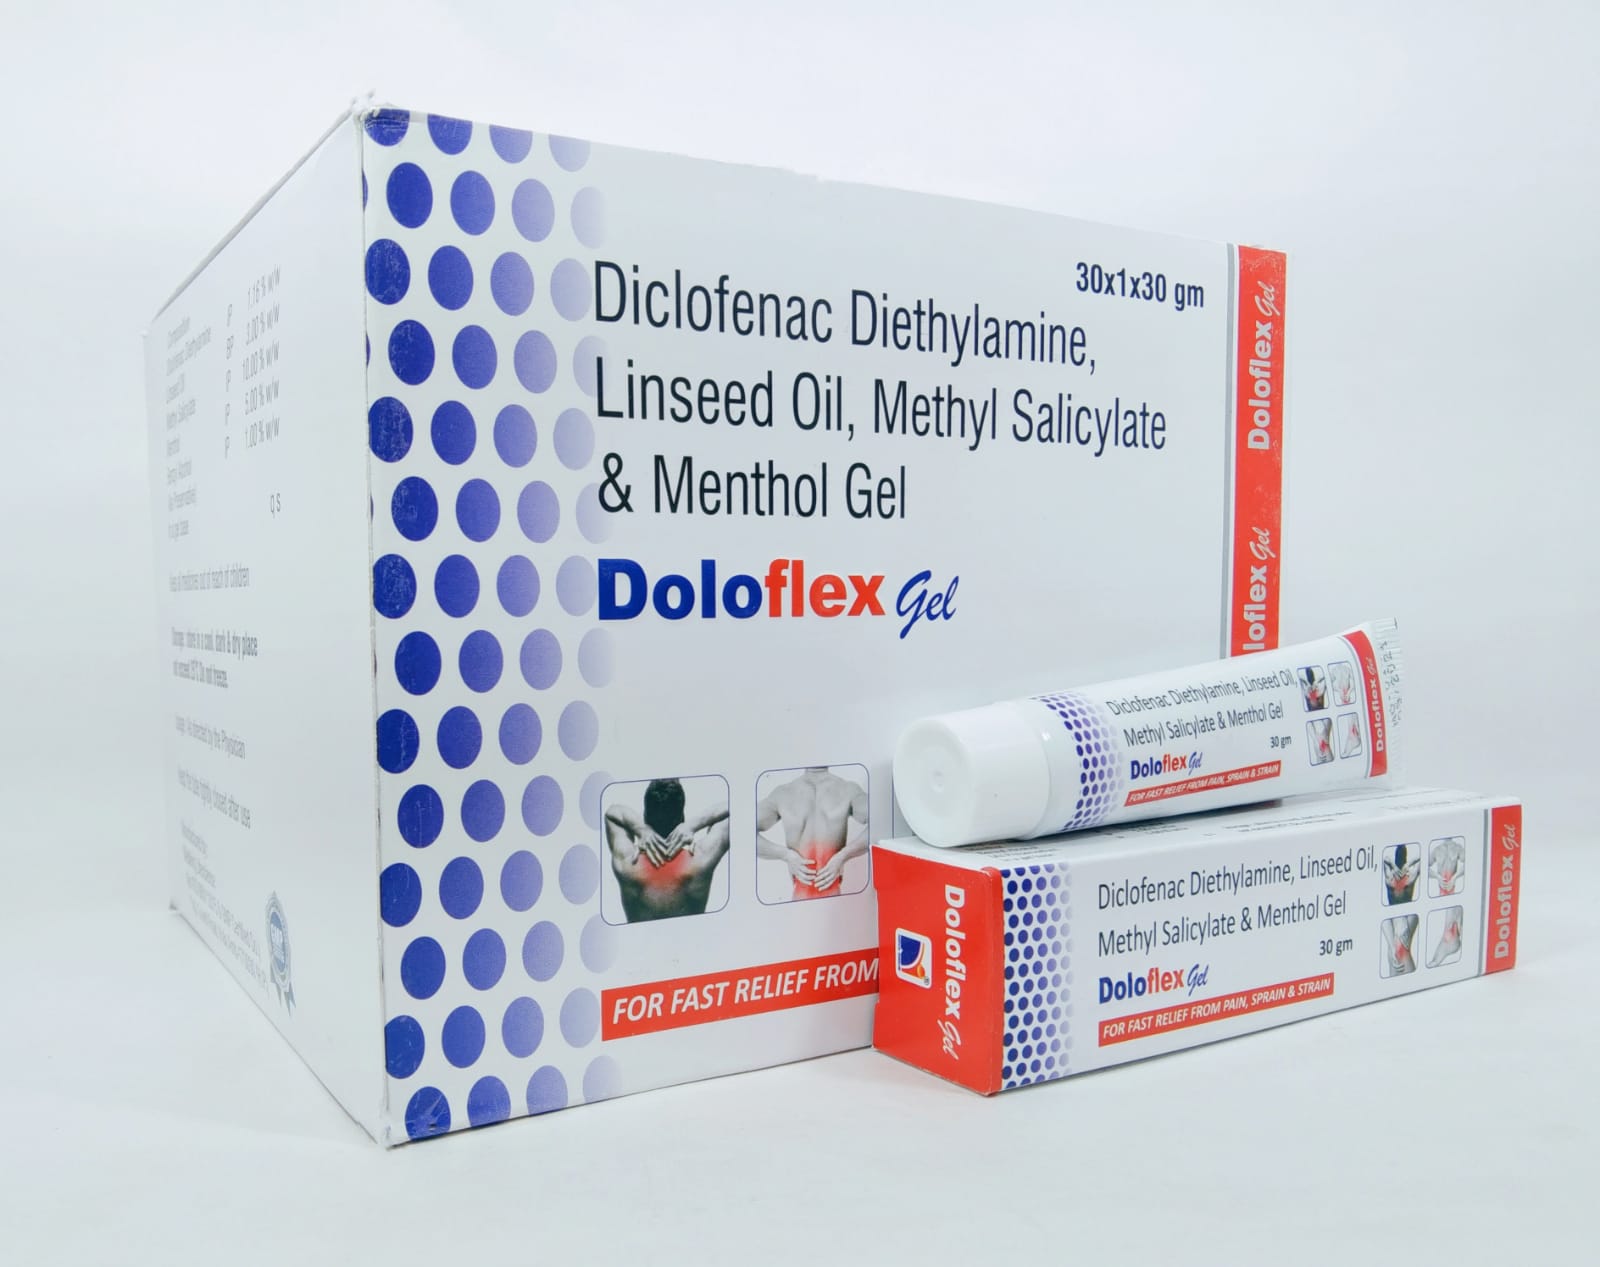 Product Name: Doloflex Gel, Compositions of Doloflex Gel are Diclofenac  Diethylamine,Linseed Oil,Methyl Salicylate & Menthol Gel - Nova Indus Pharmaceuticals